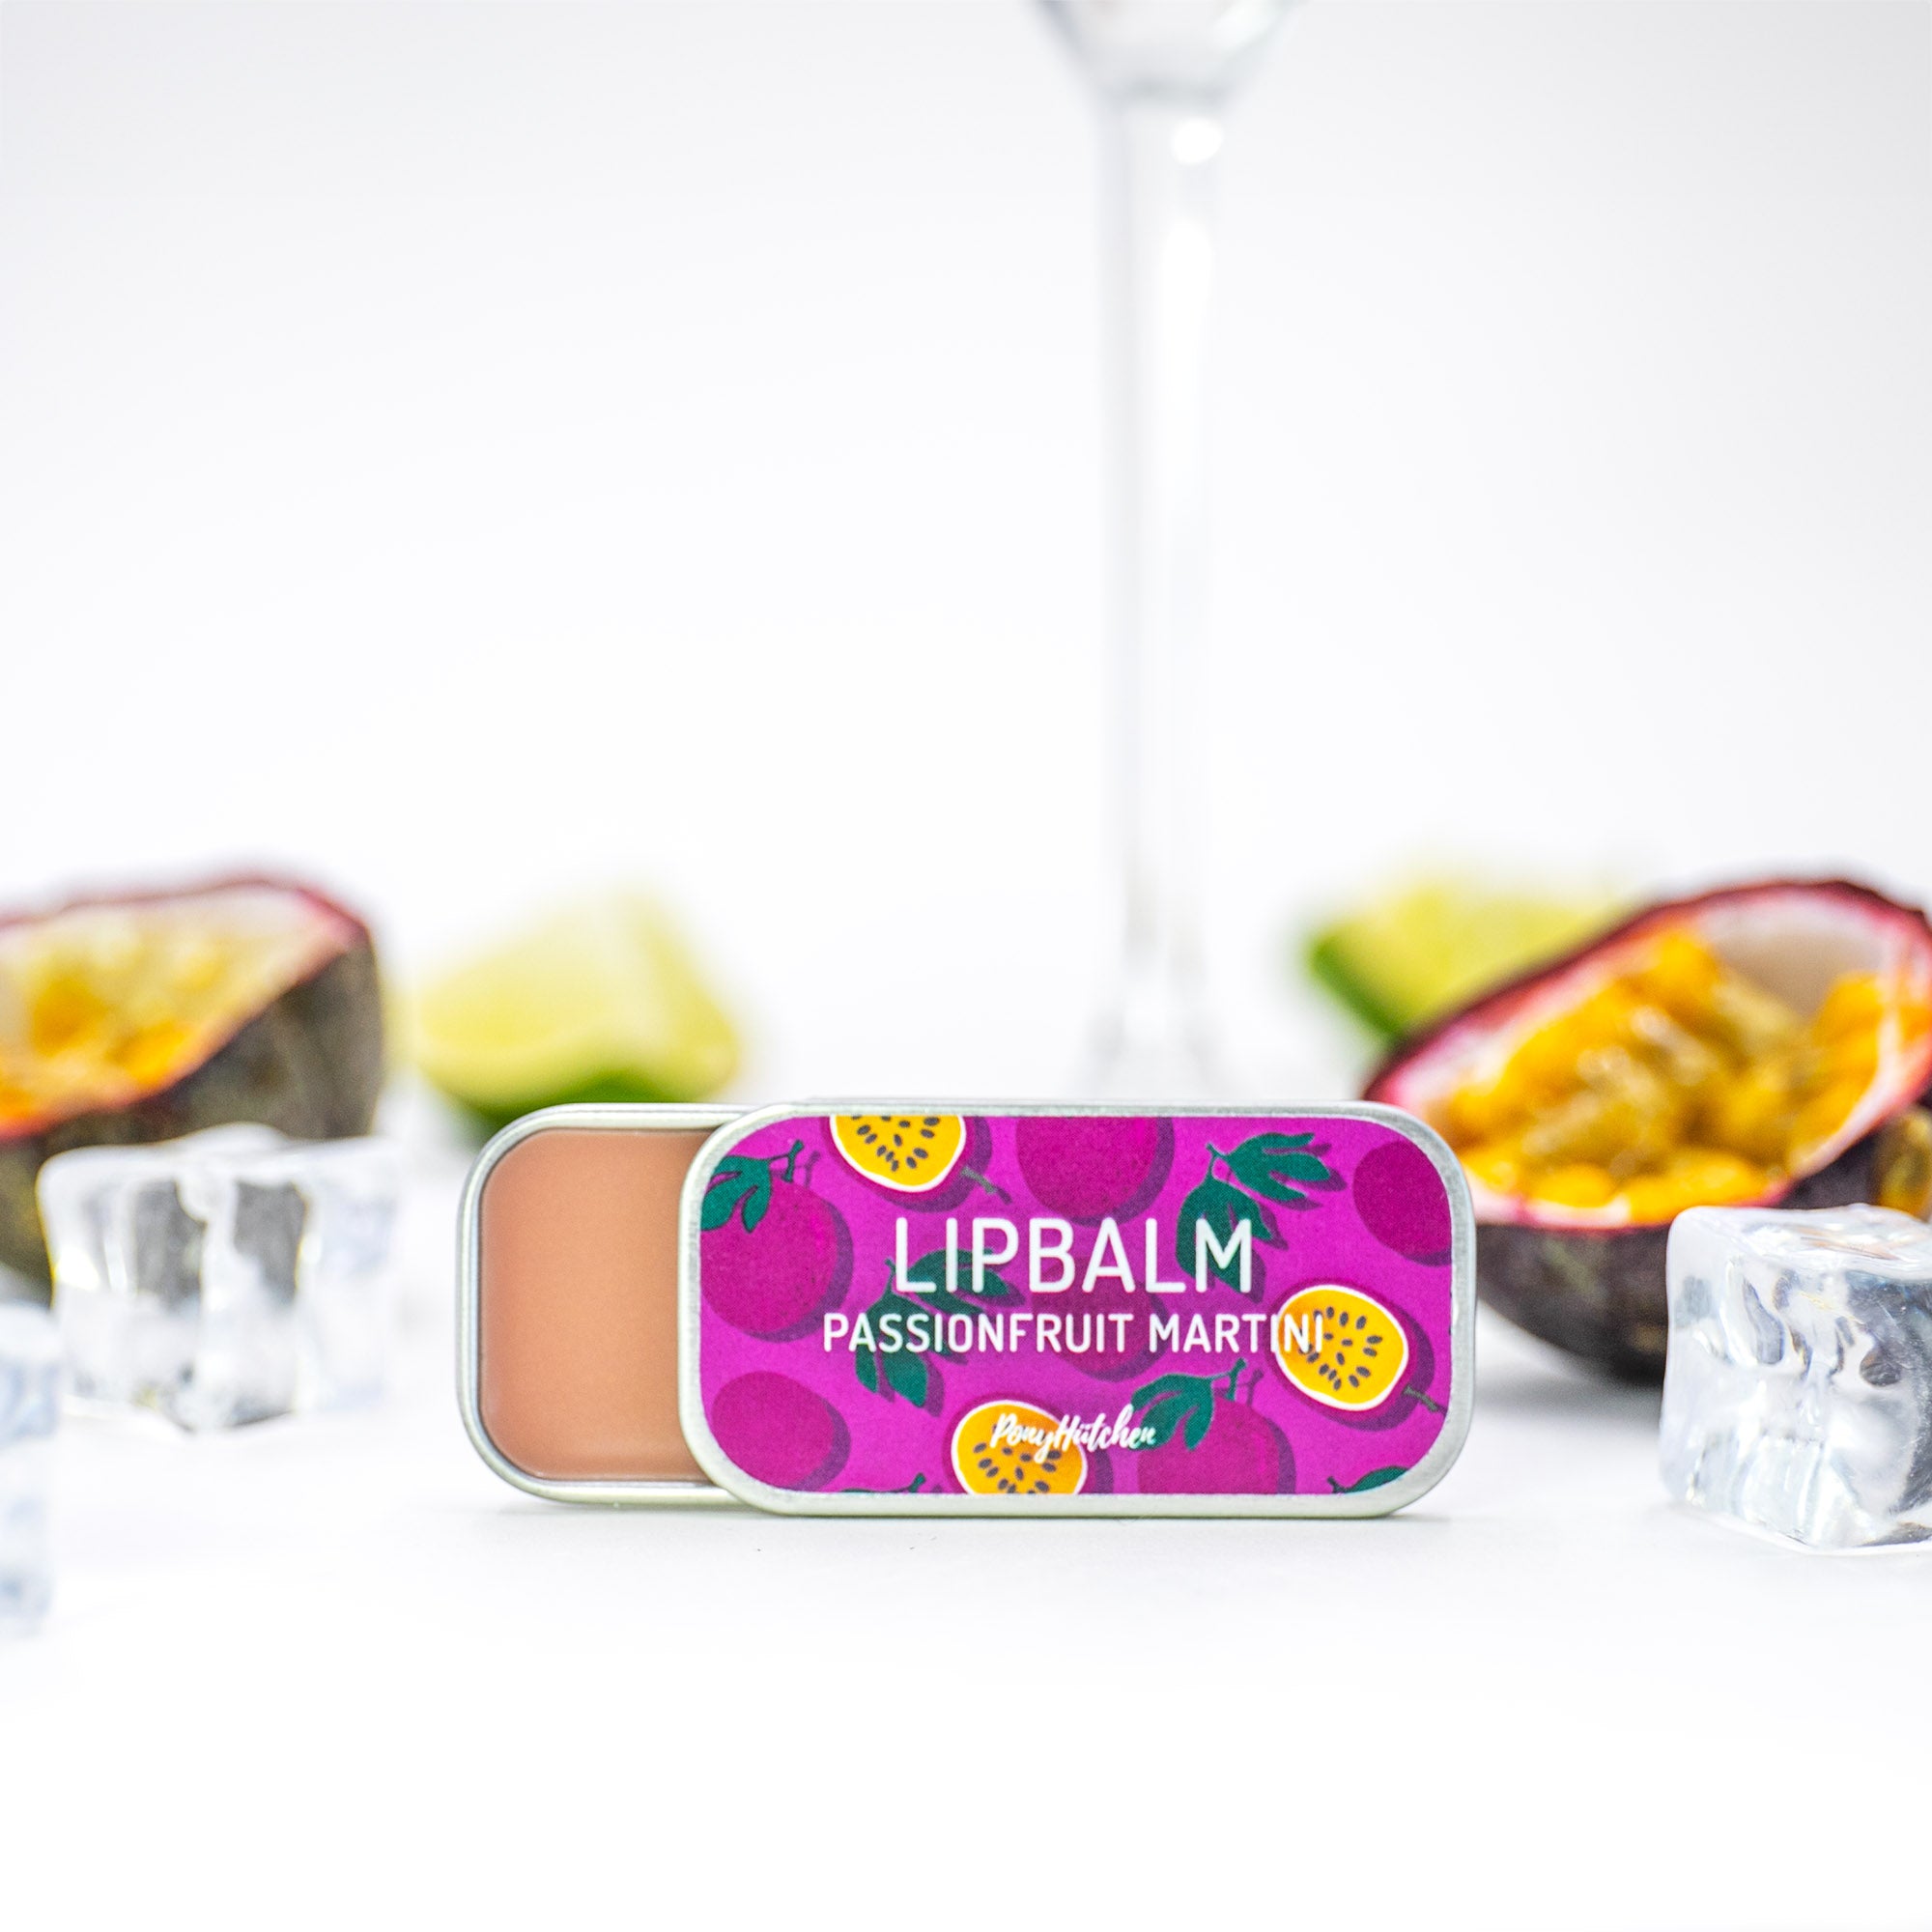 Lipbalm Passionfruit-Martini